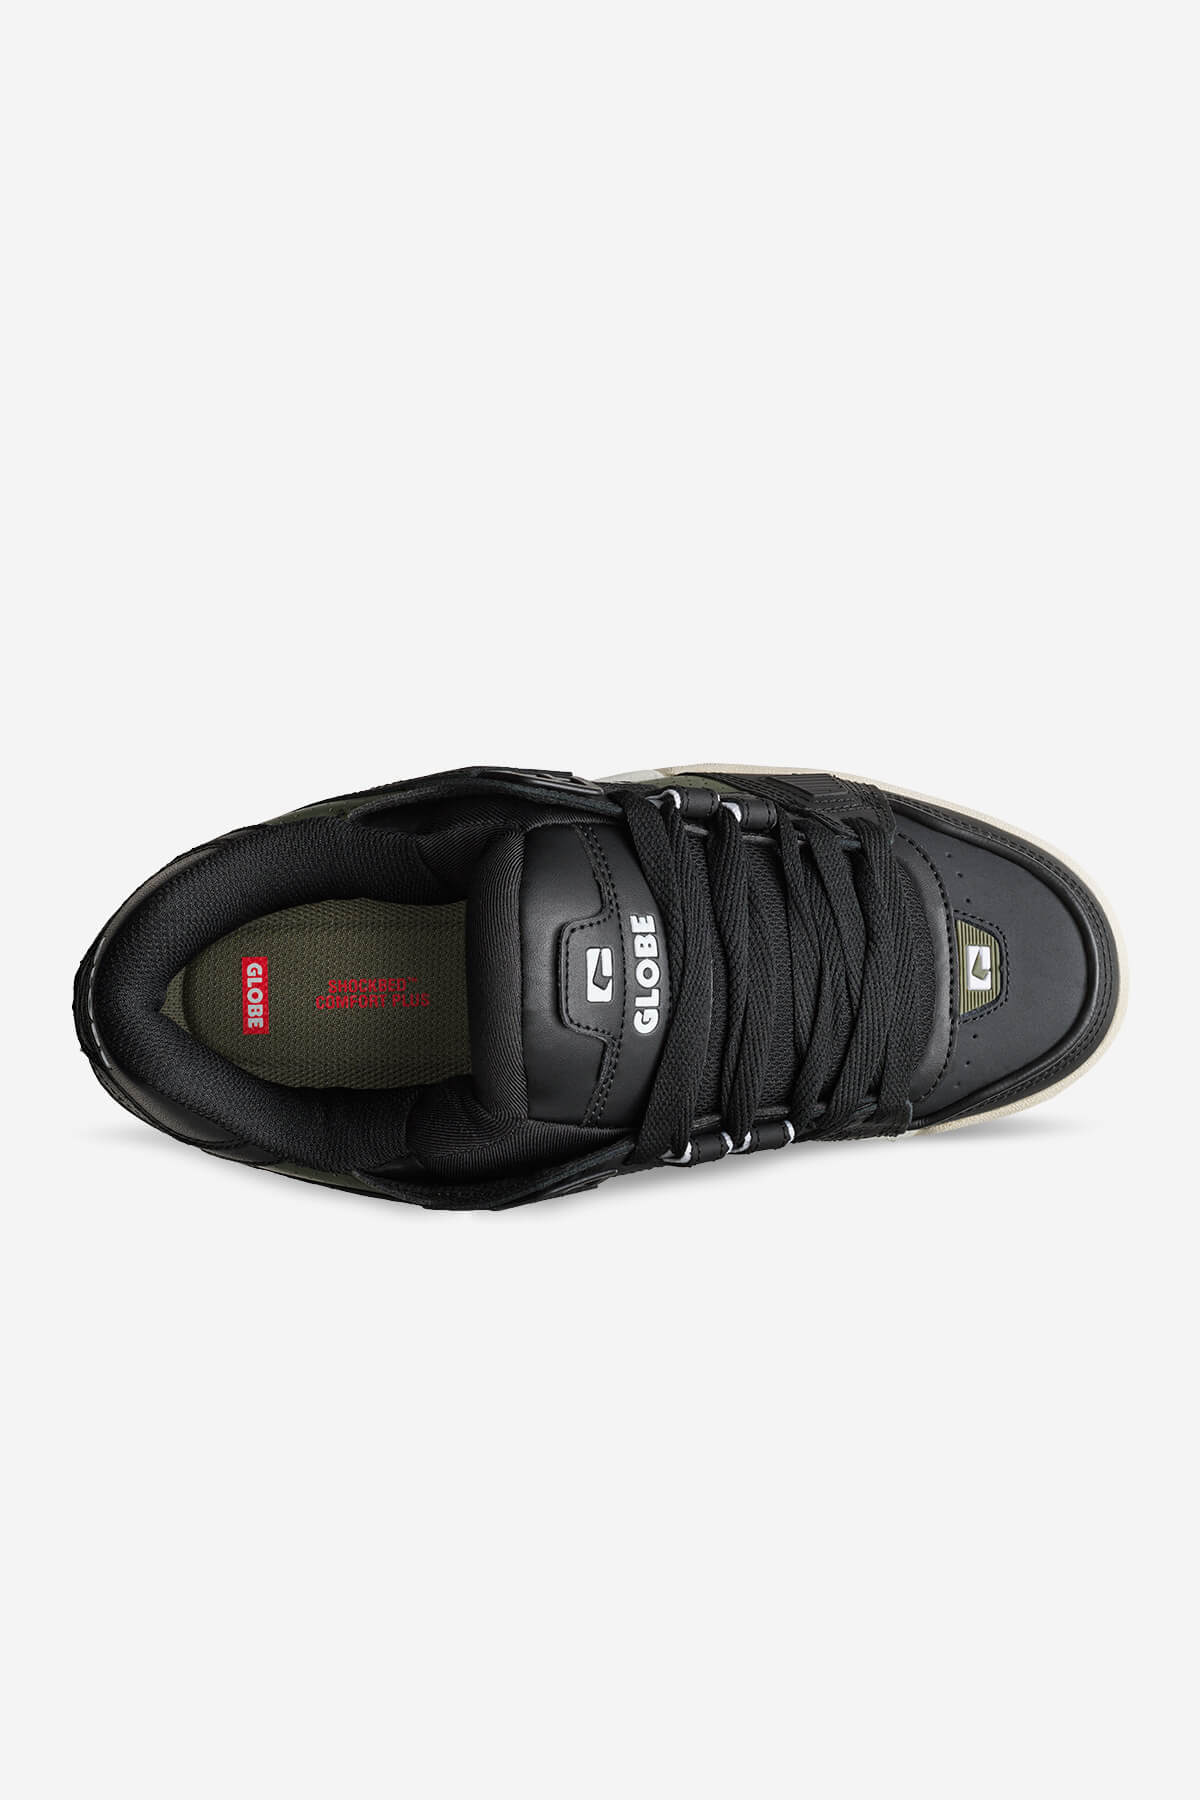 Globe - Sabre - Black/Combat - Skate Shoes